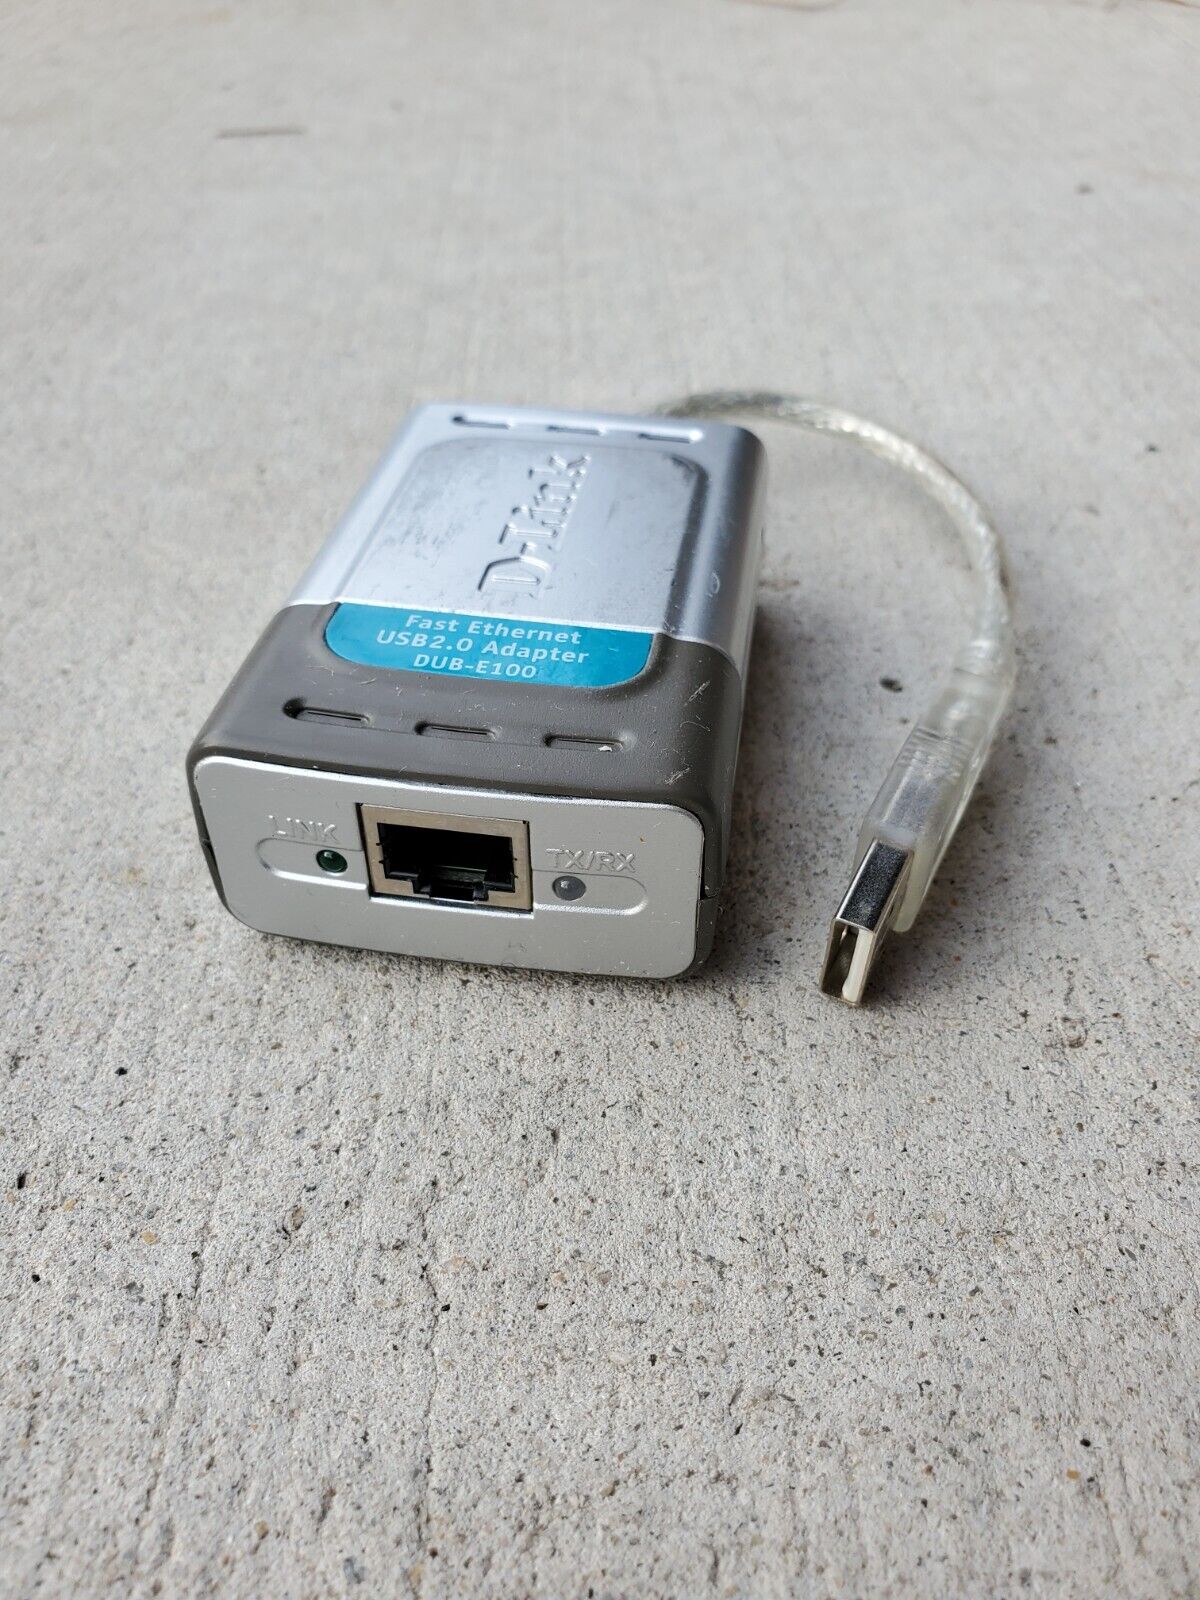 D-Link USB 2.0A to Network Adapter Model DUB-E100-B1 (QTY 1)